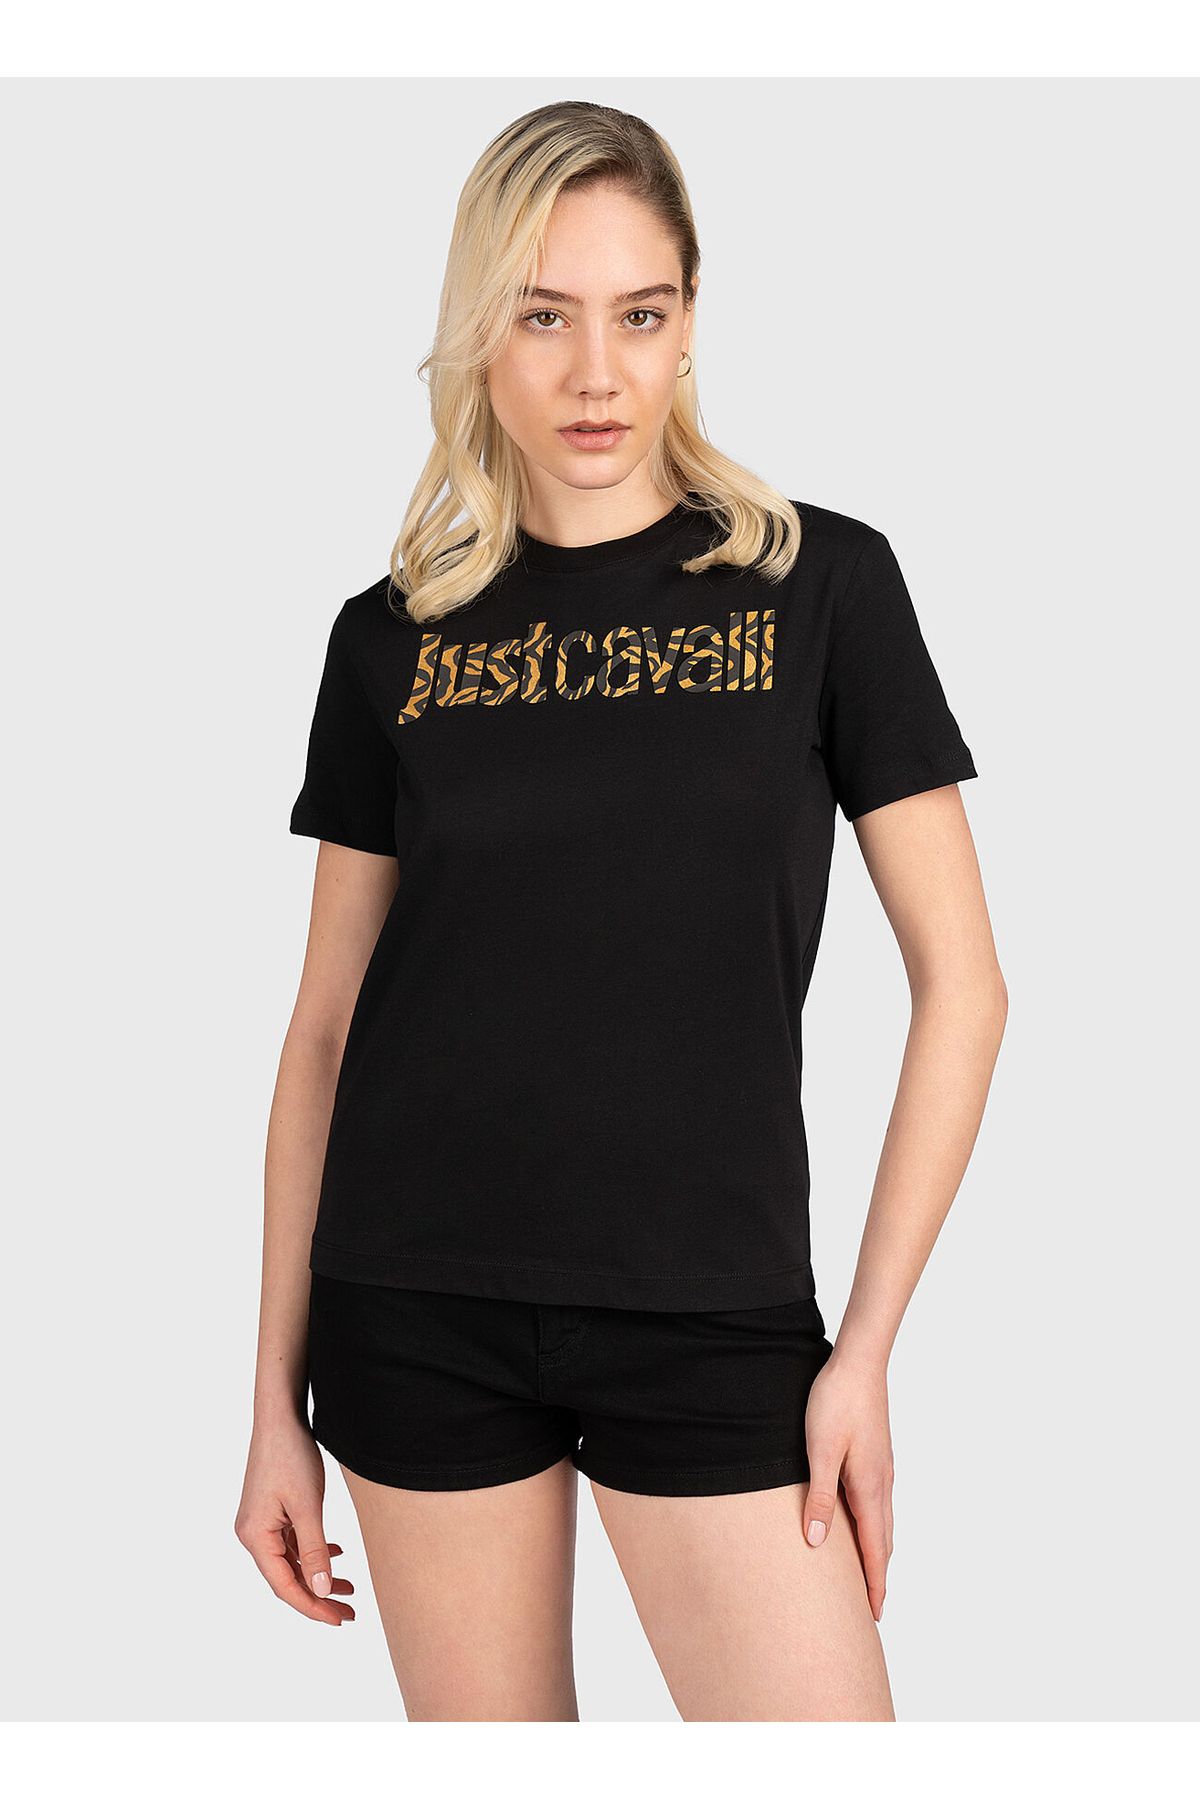 Just Cavalli Bisiklet Yaka Baskılı Siyah Kadın T-shirt 75pahg05